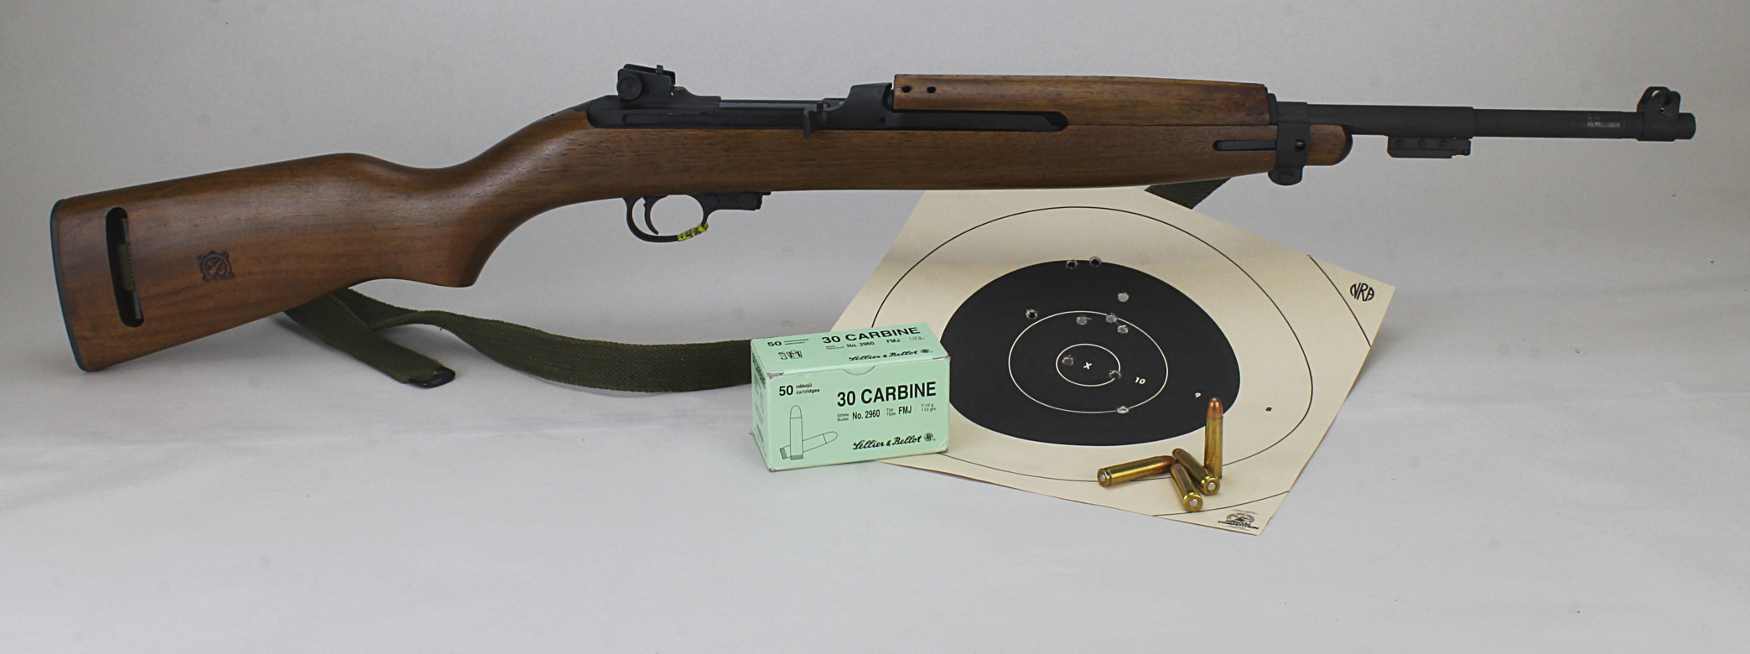 M1 carbine serial number lookup